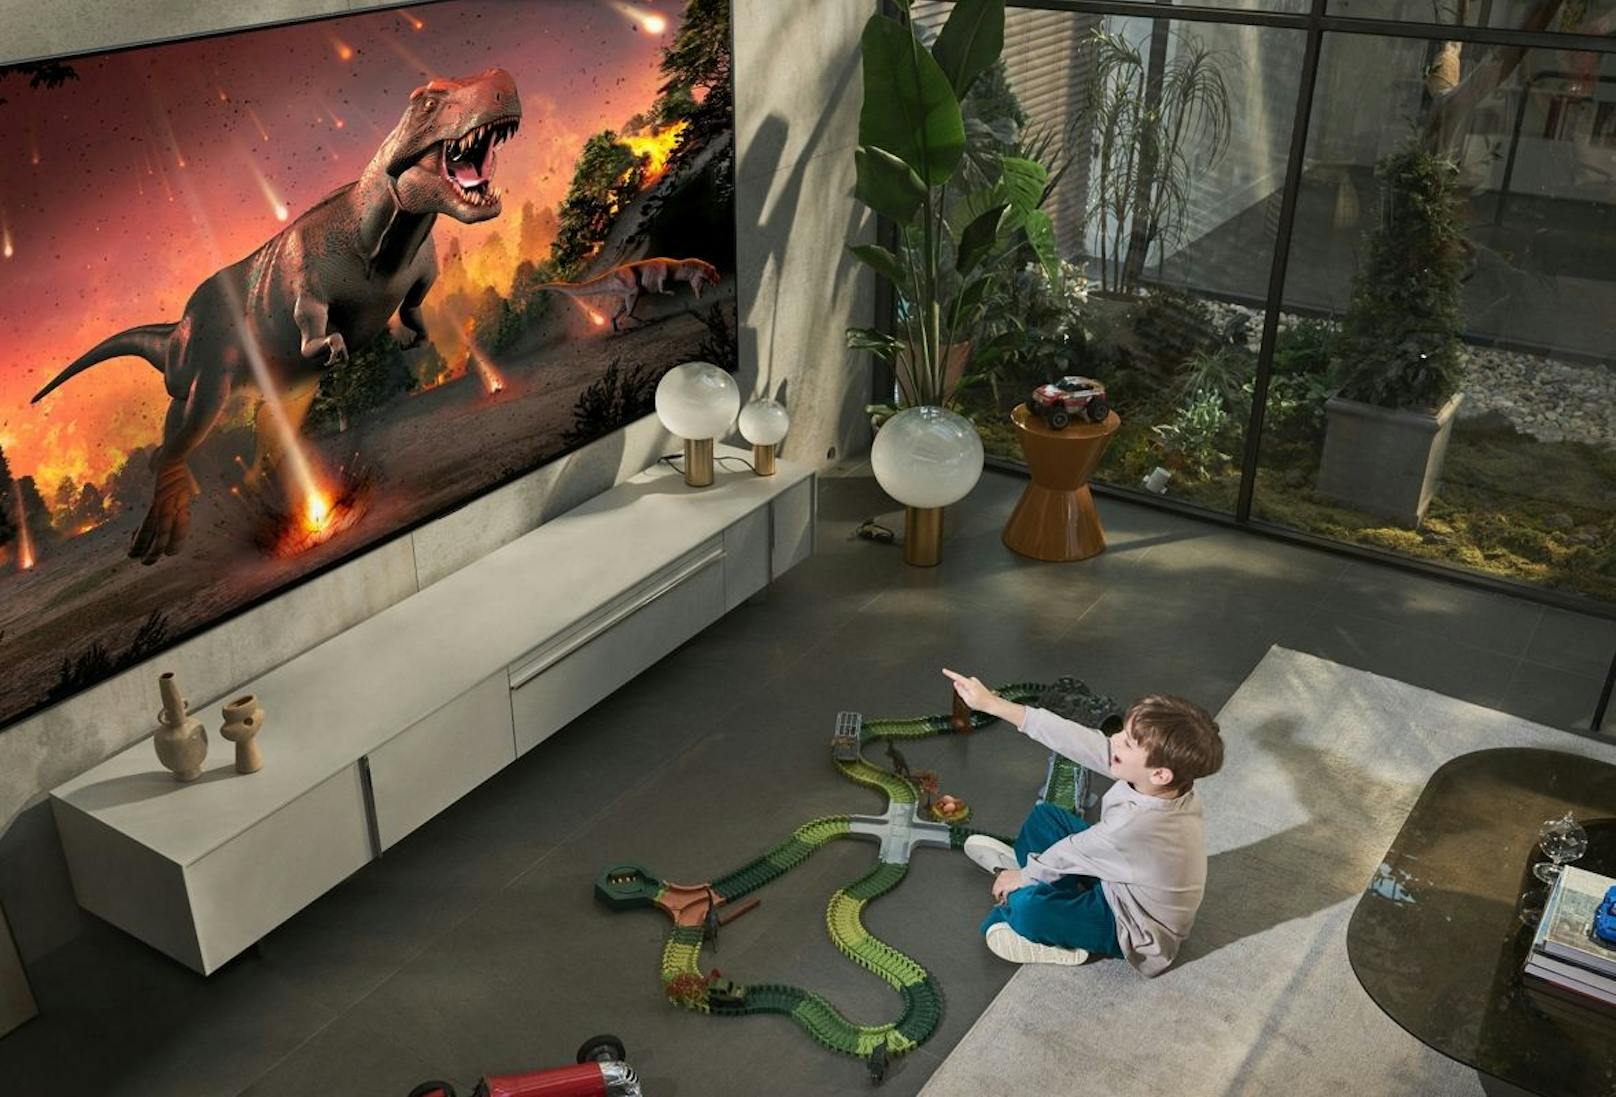 97 Zoll – LG zeigt den größten OLED-TV der Welt